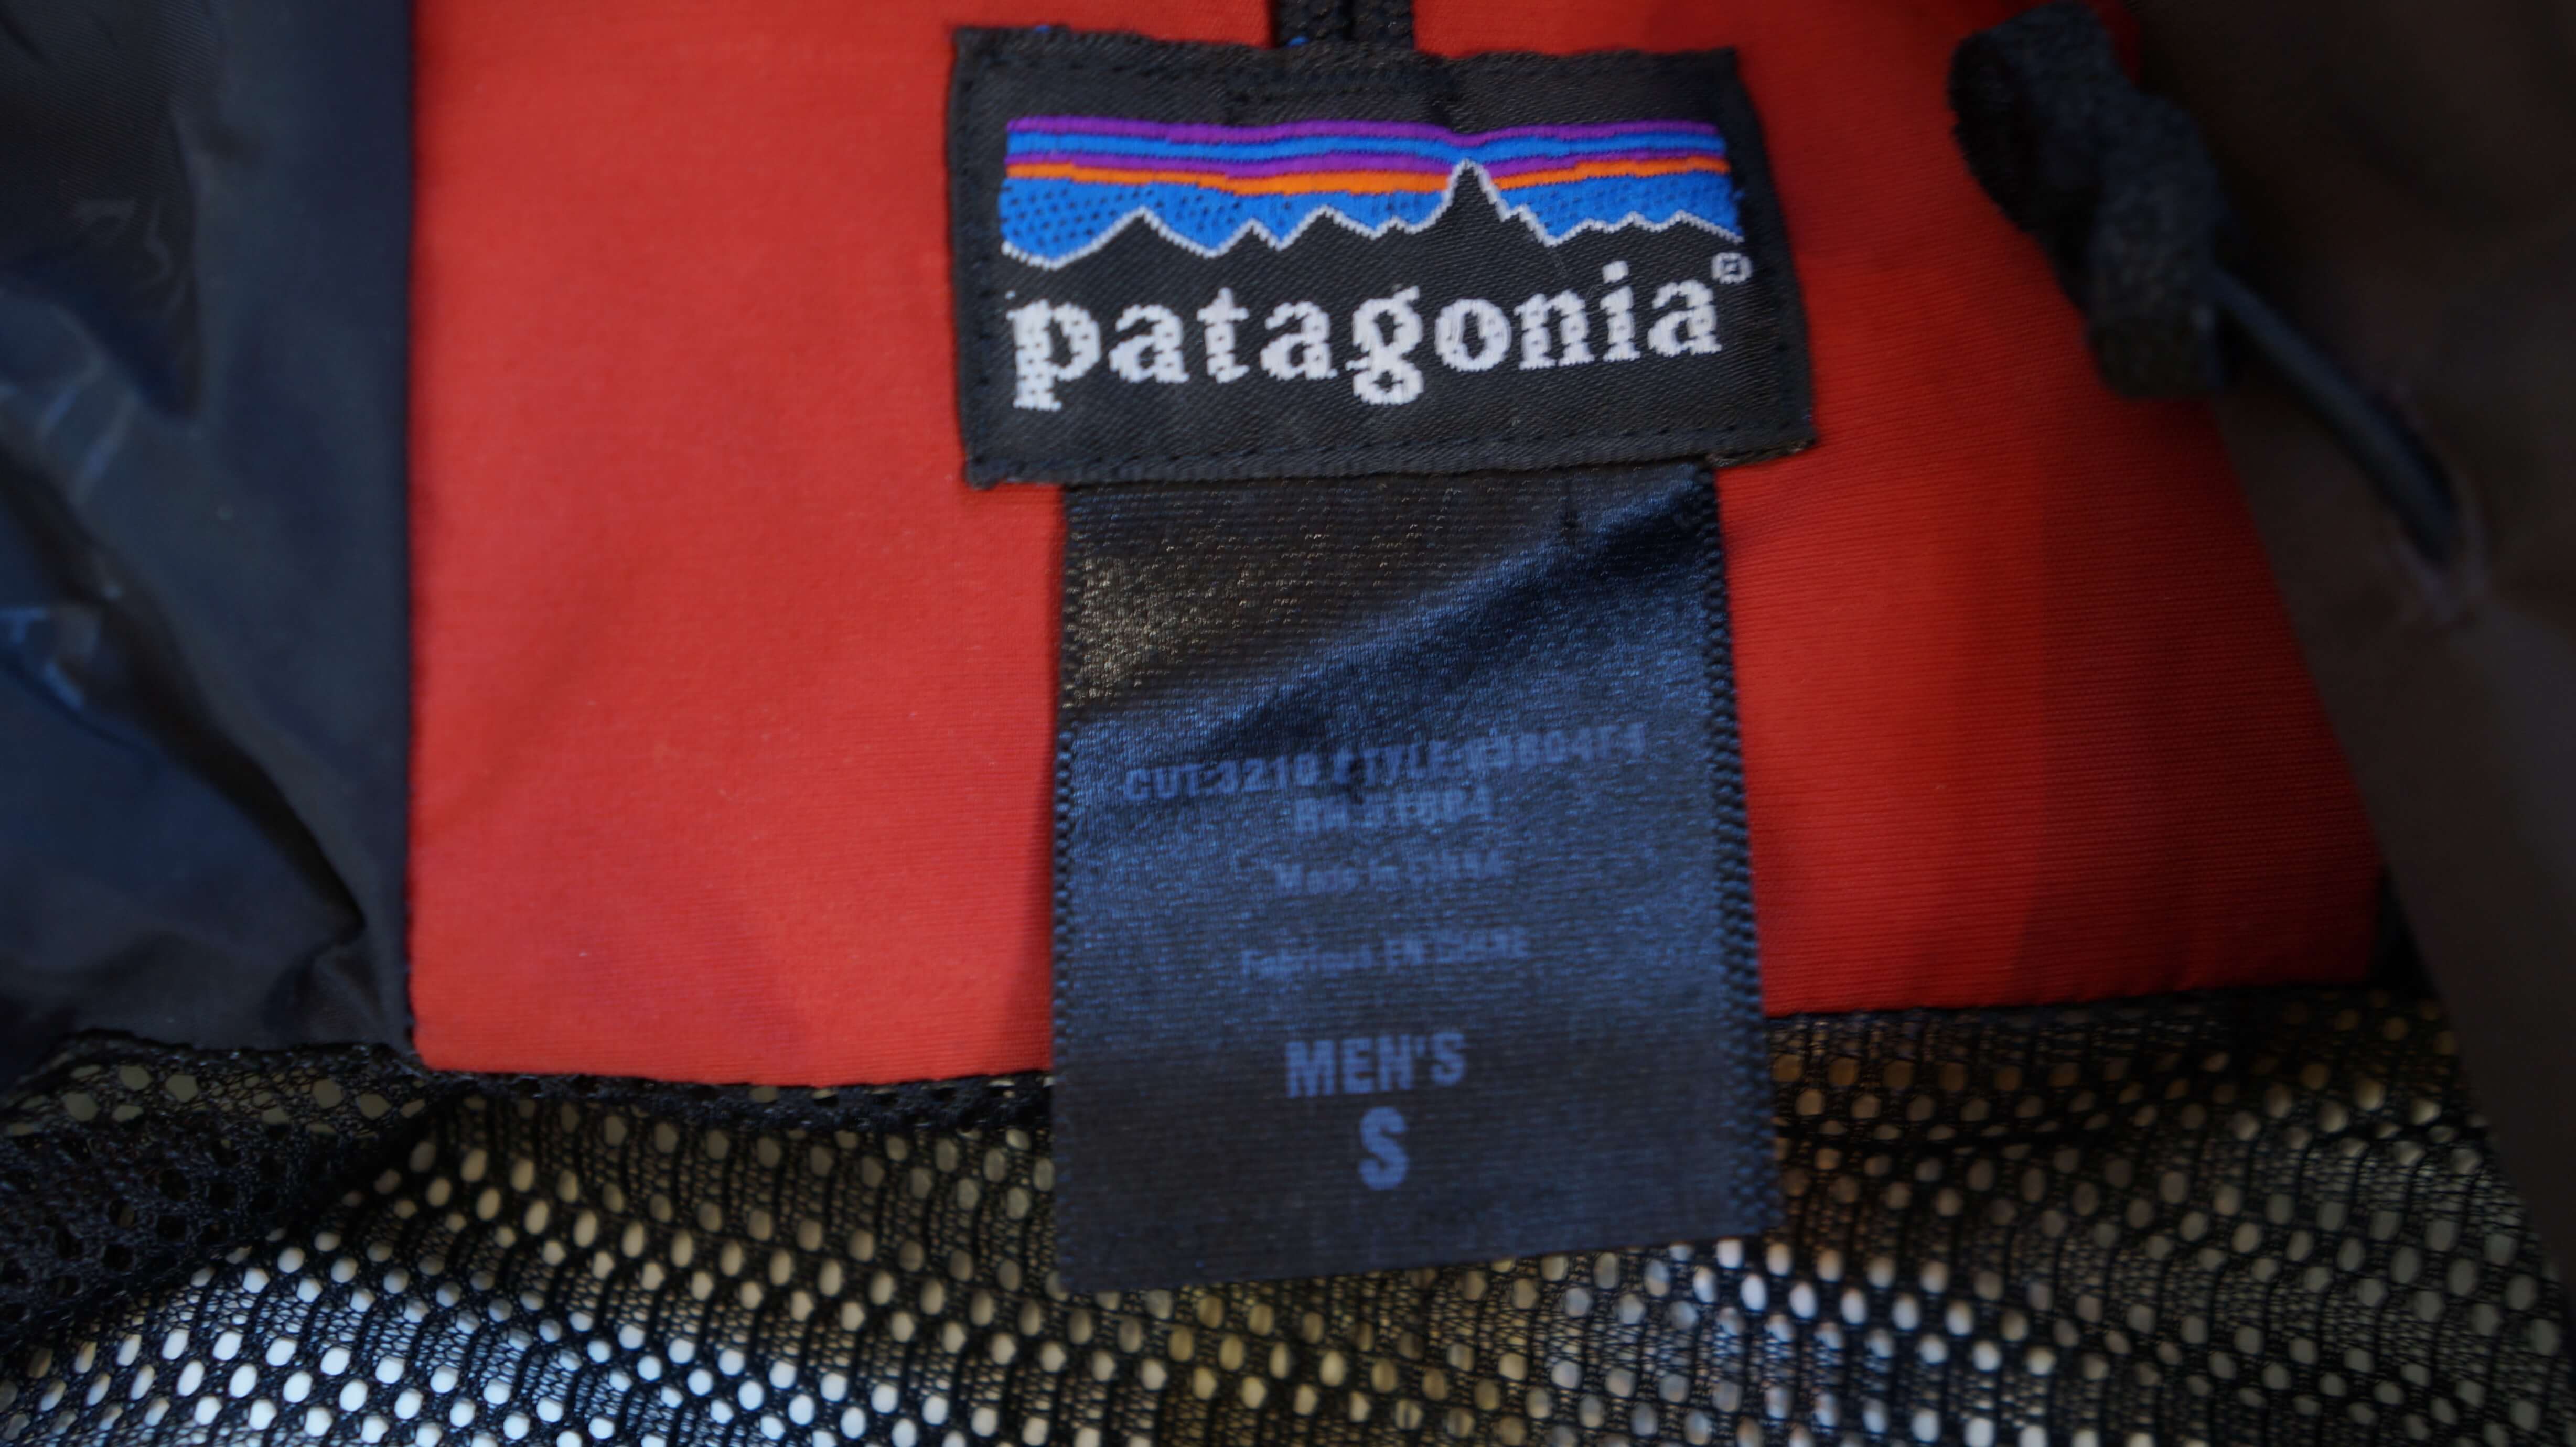 Patagonia Storm Jaket size S Red: Charcoal Grey / パタゴニア ストームジャケット Sサイズ レッド：チャコールグレイ